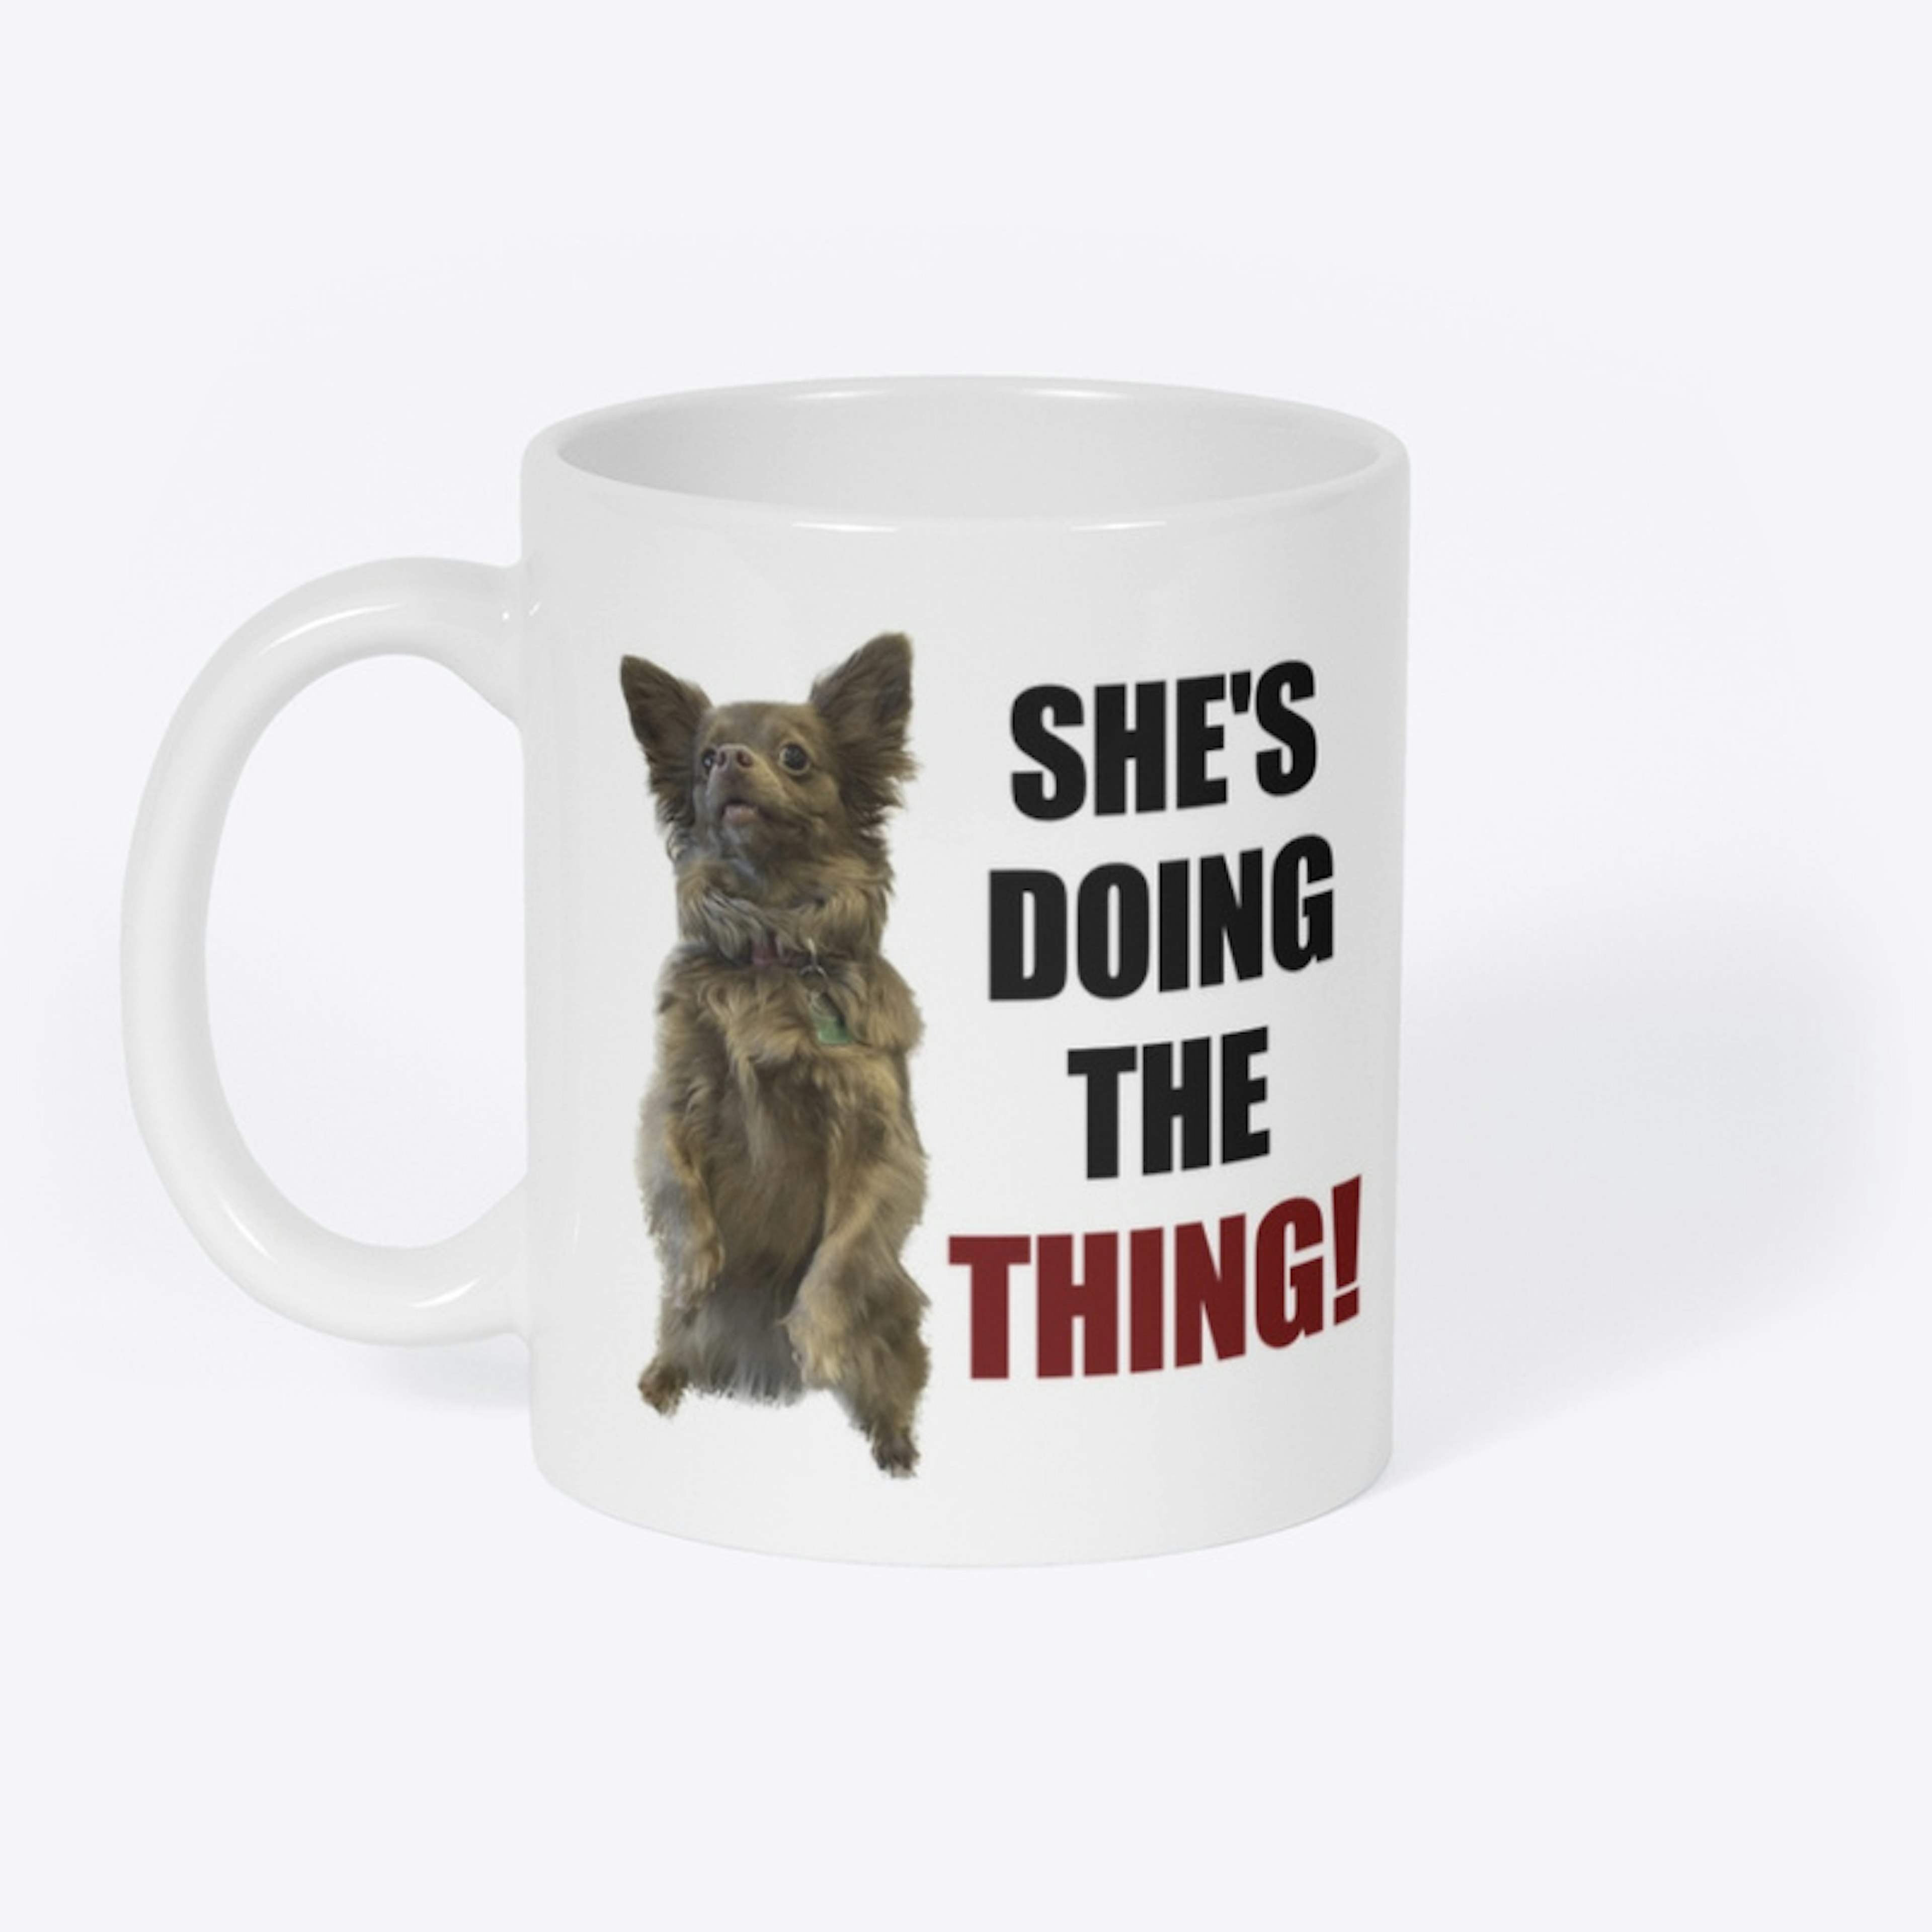 She's Doing The Thing! Mug